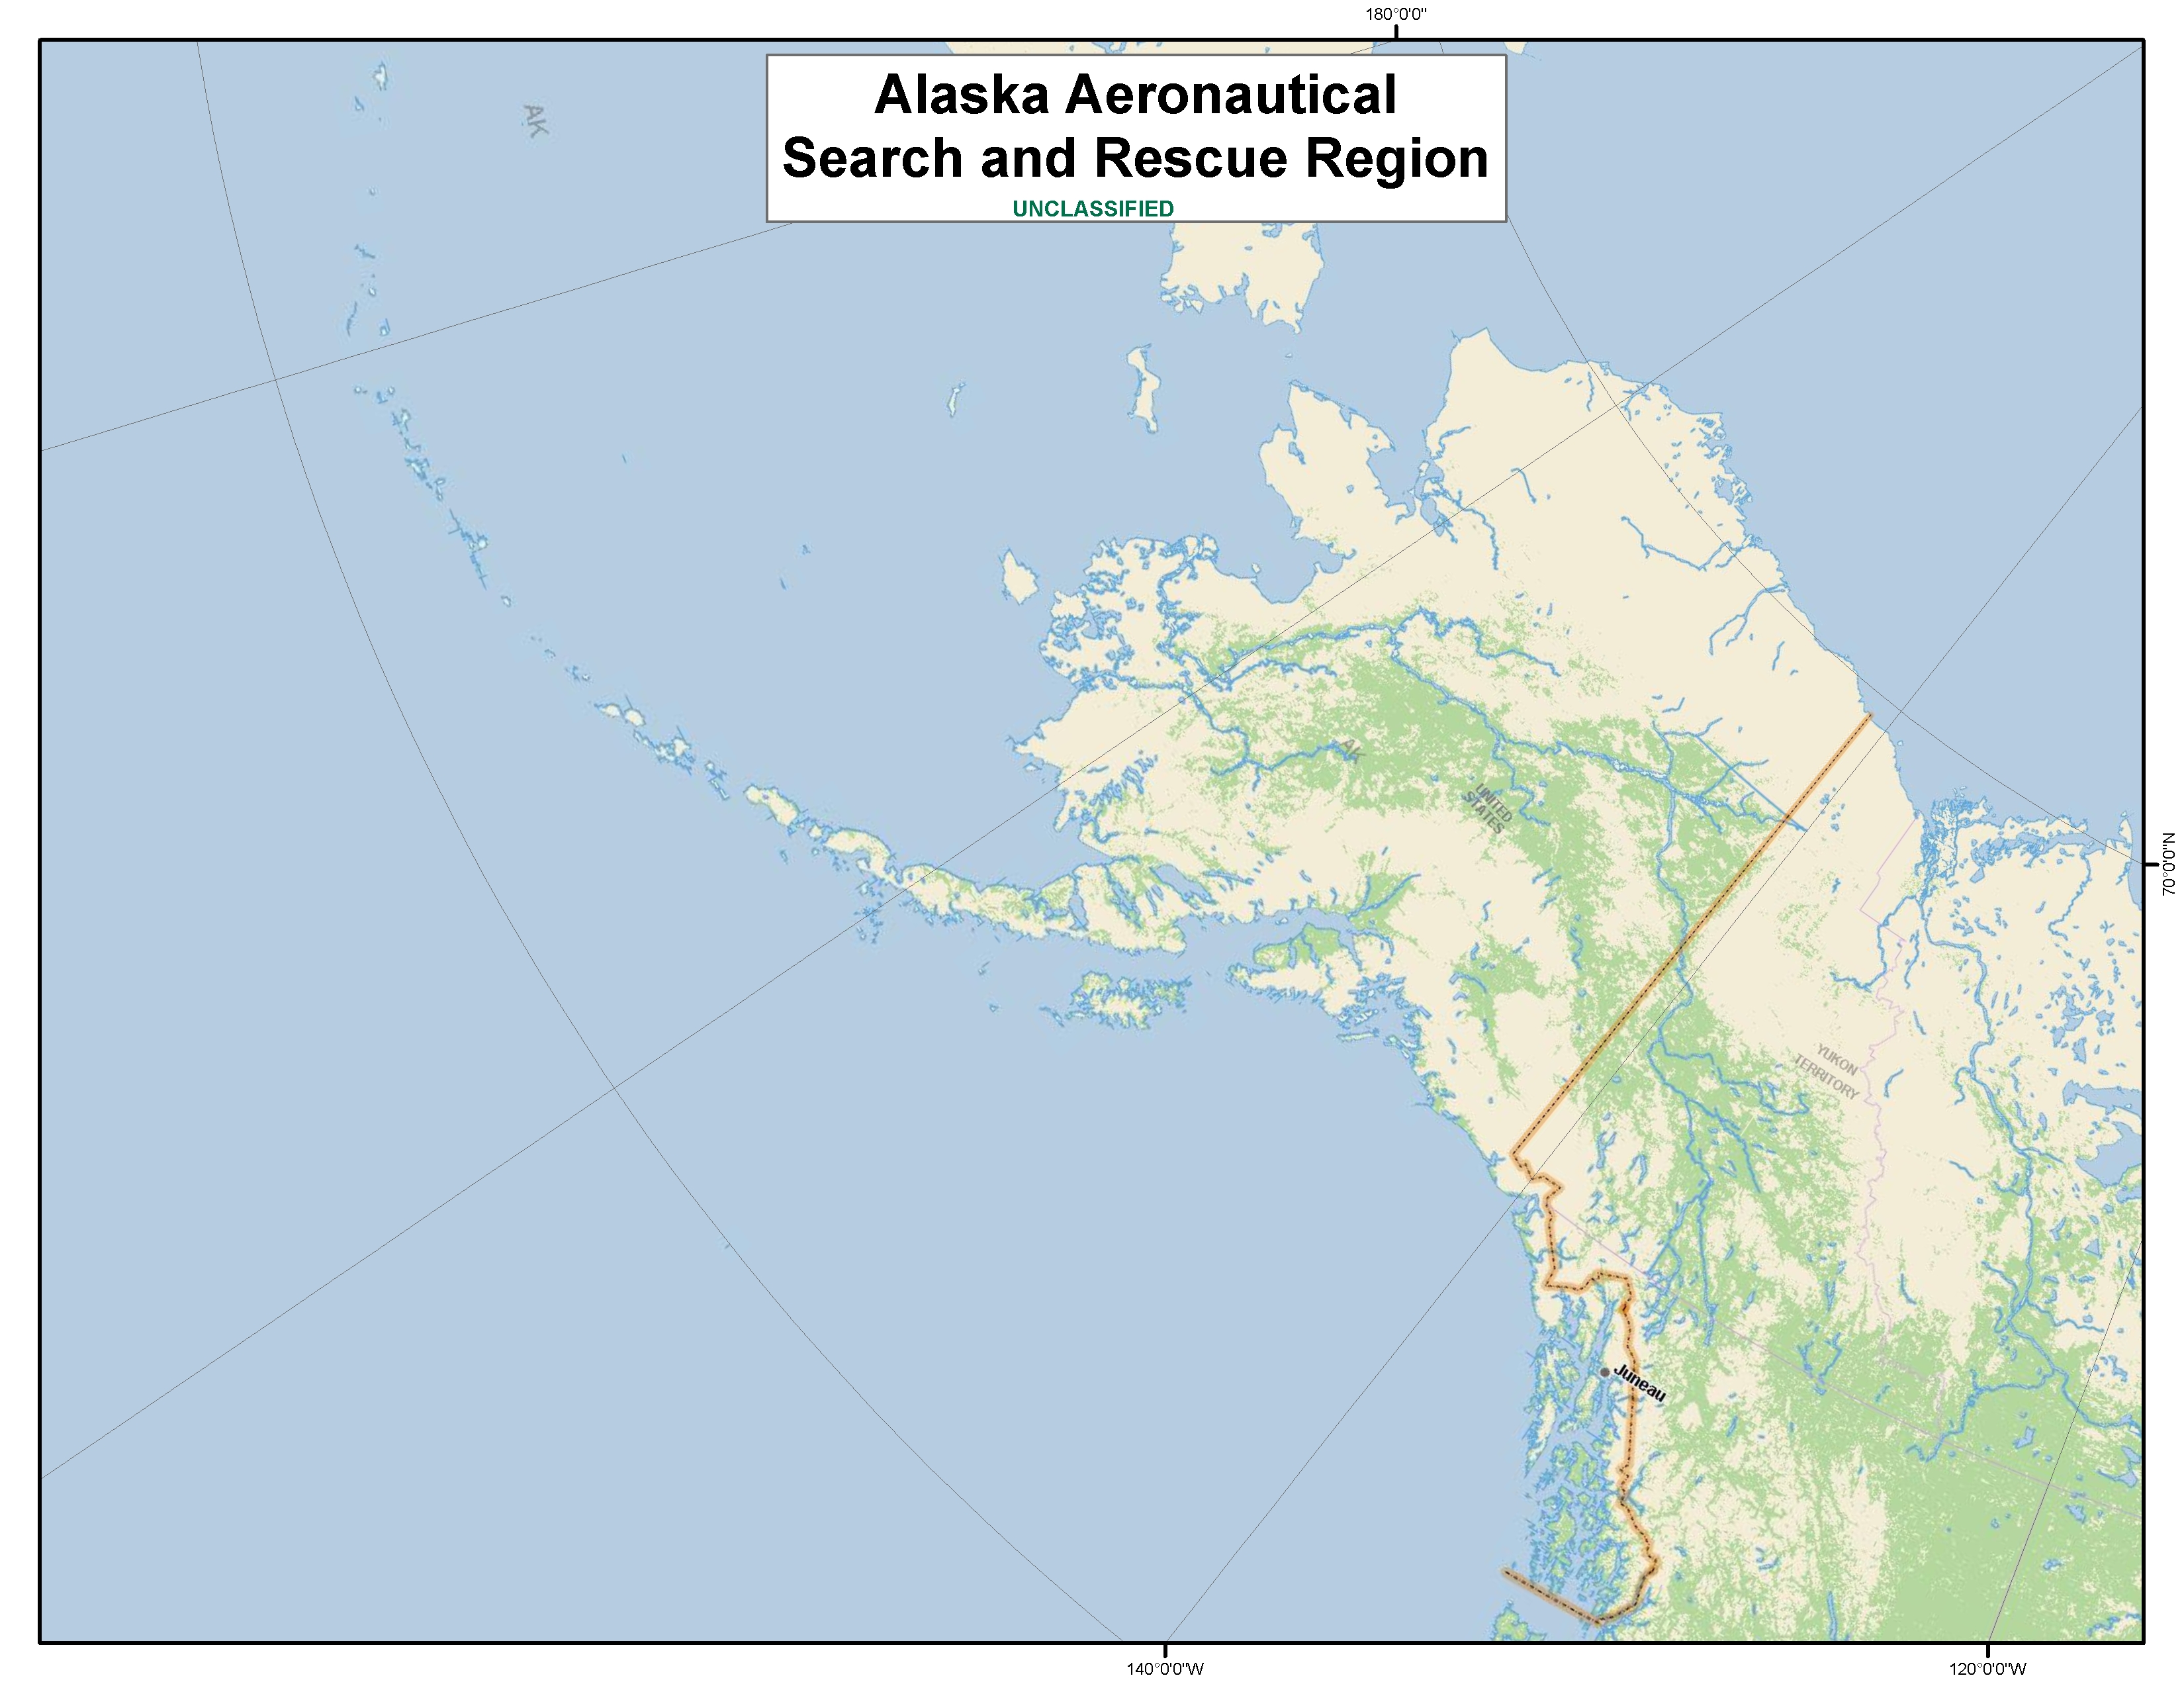 SRR Alaska Aeronautical